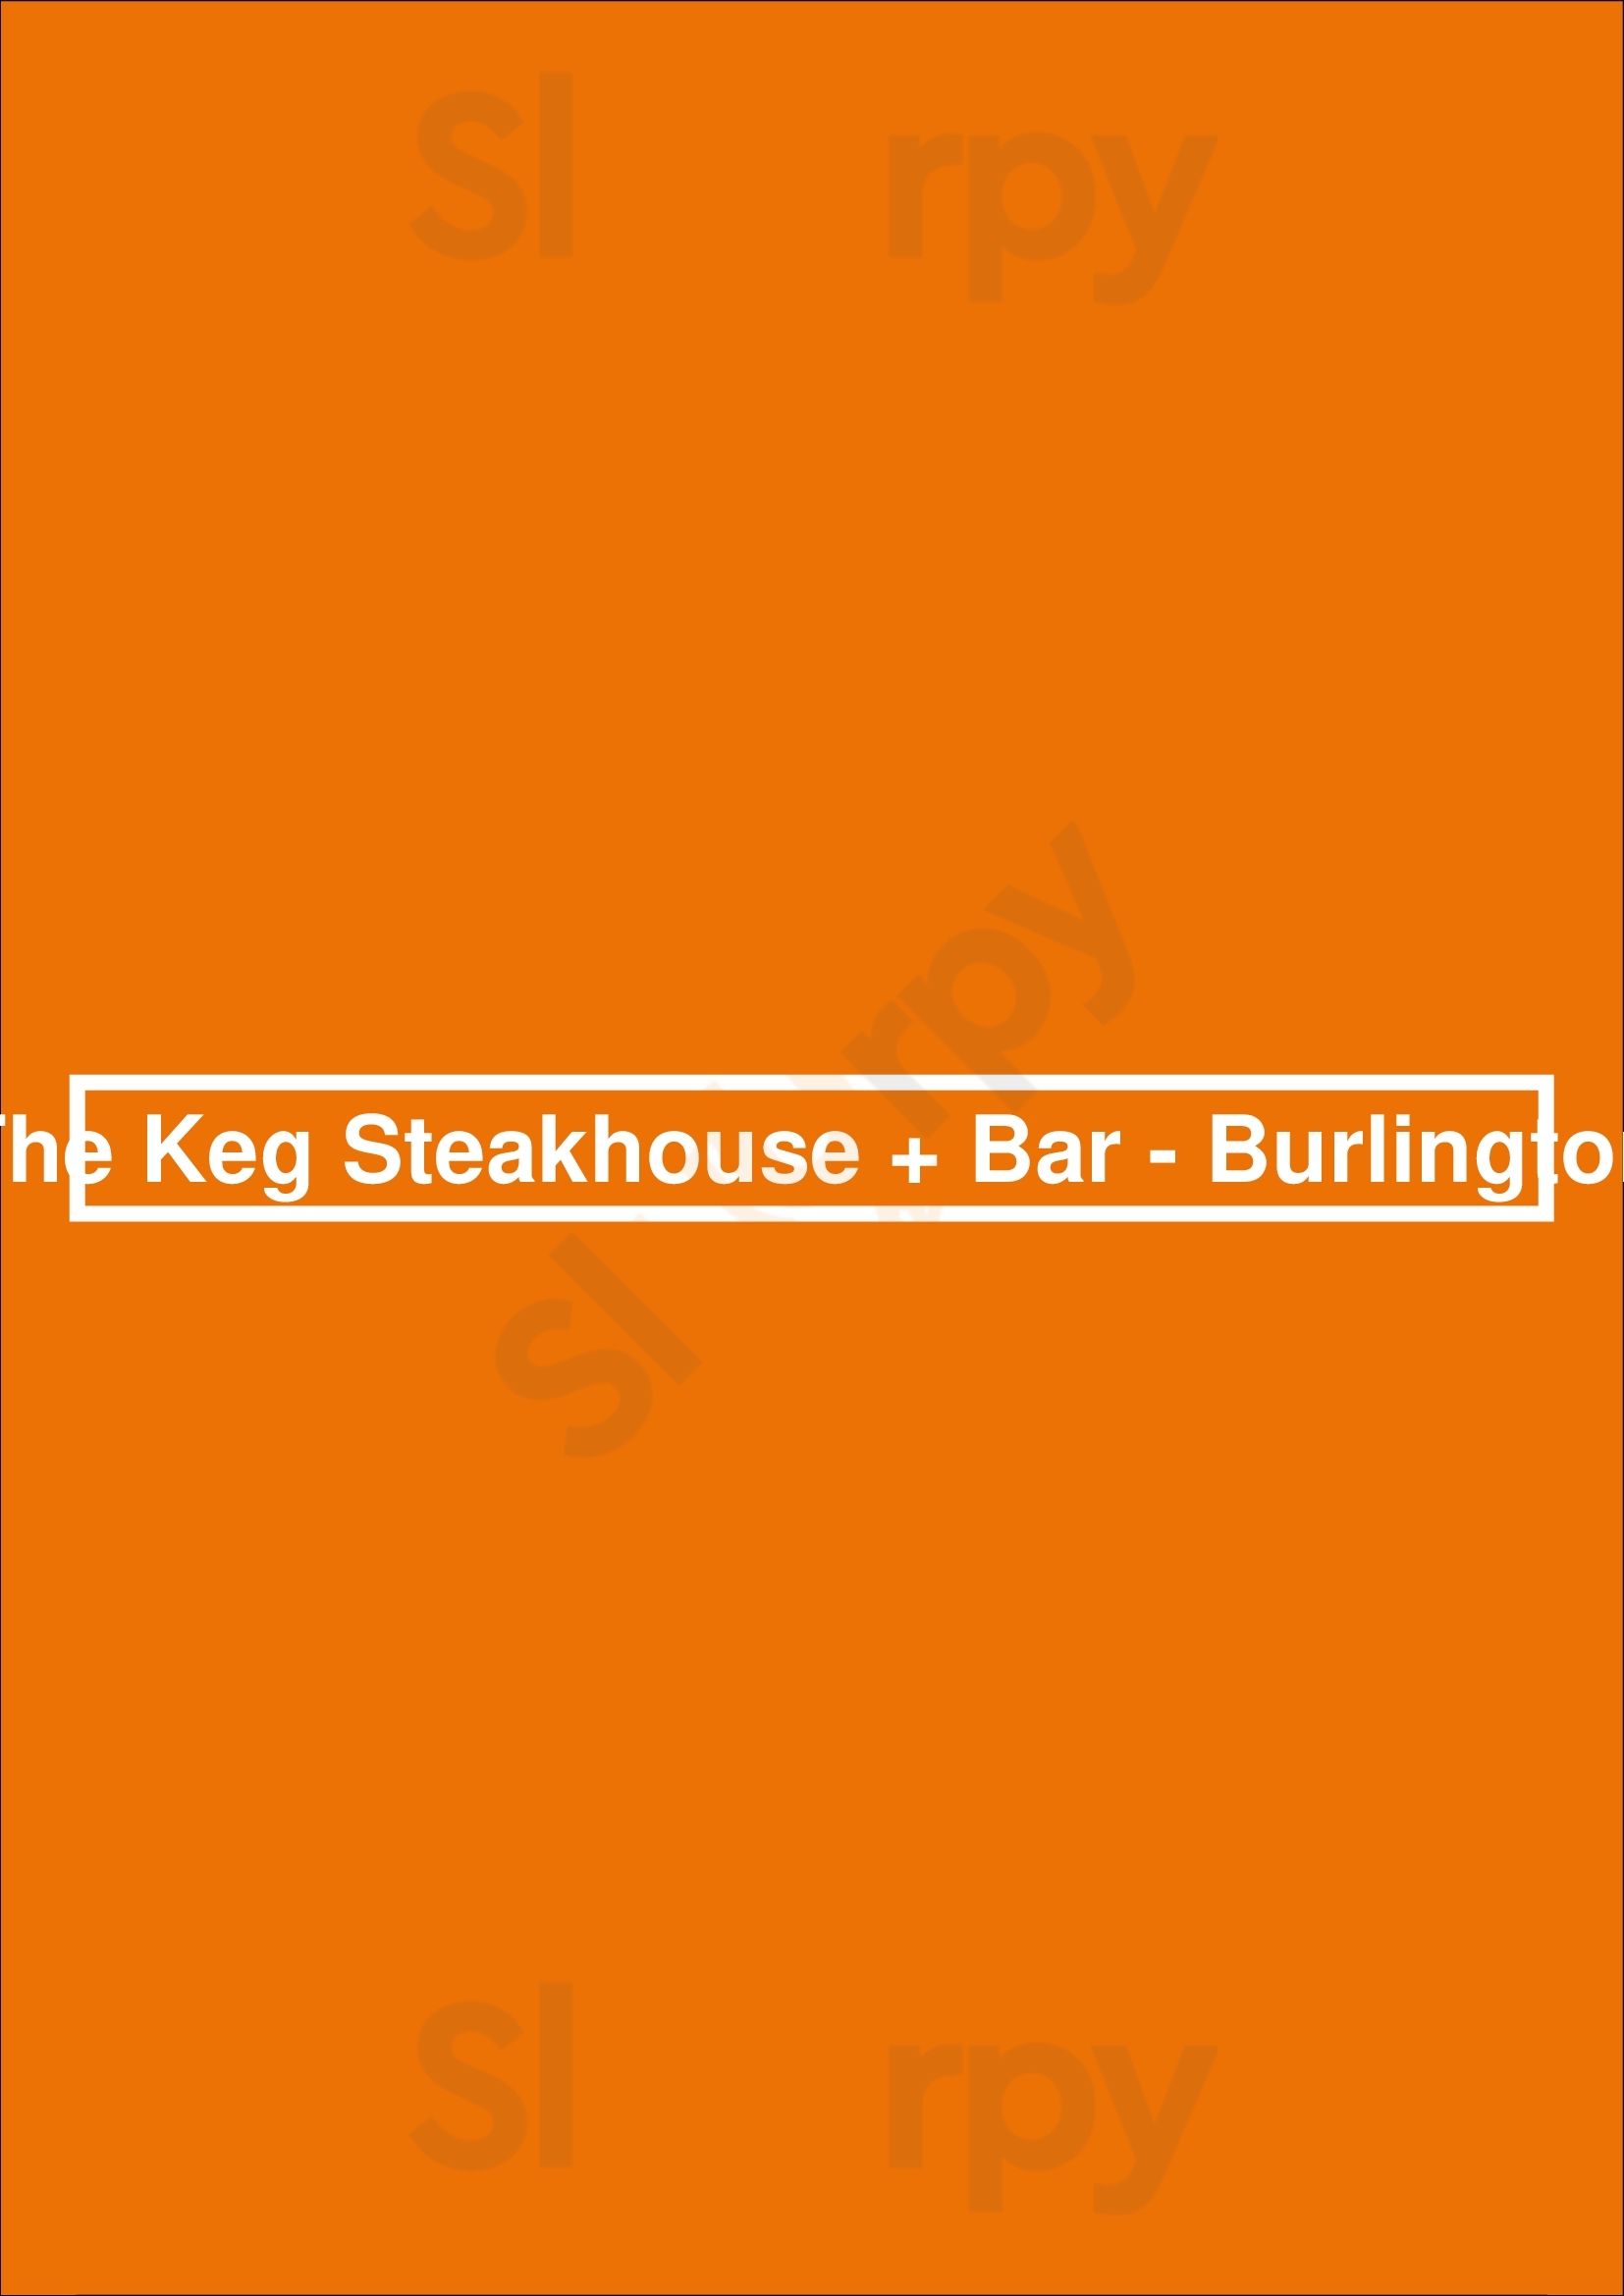 The Keg Steakhouse + Bar - Burlington Burlington Menu - 1